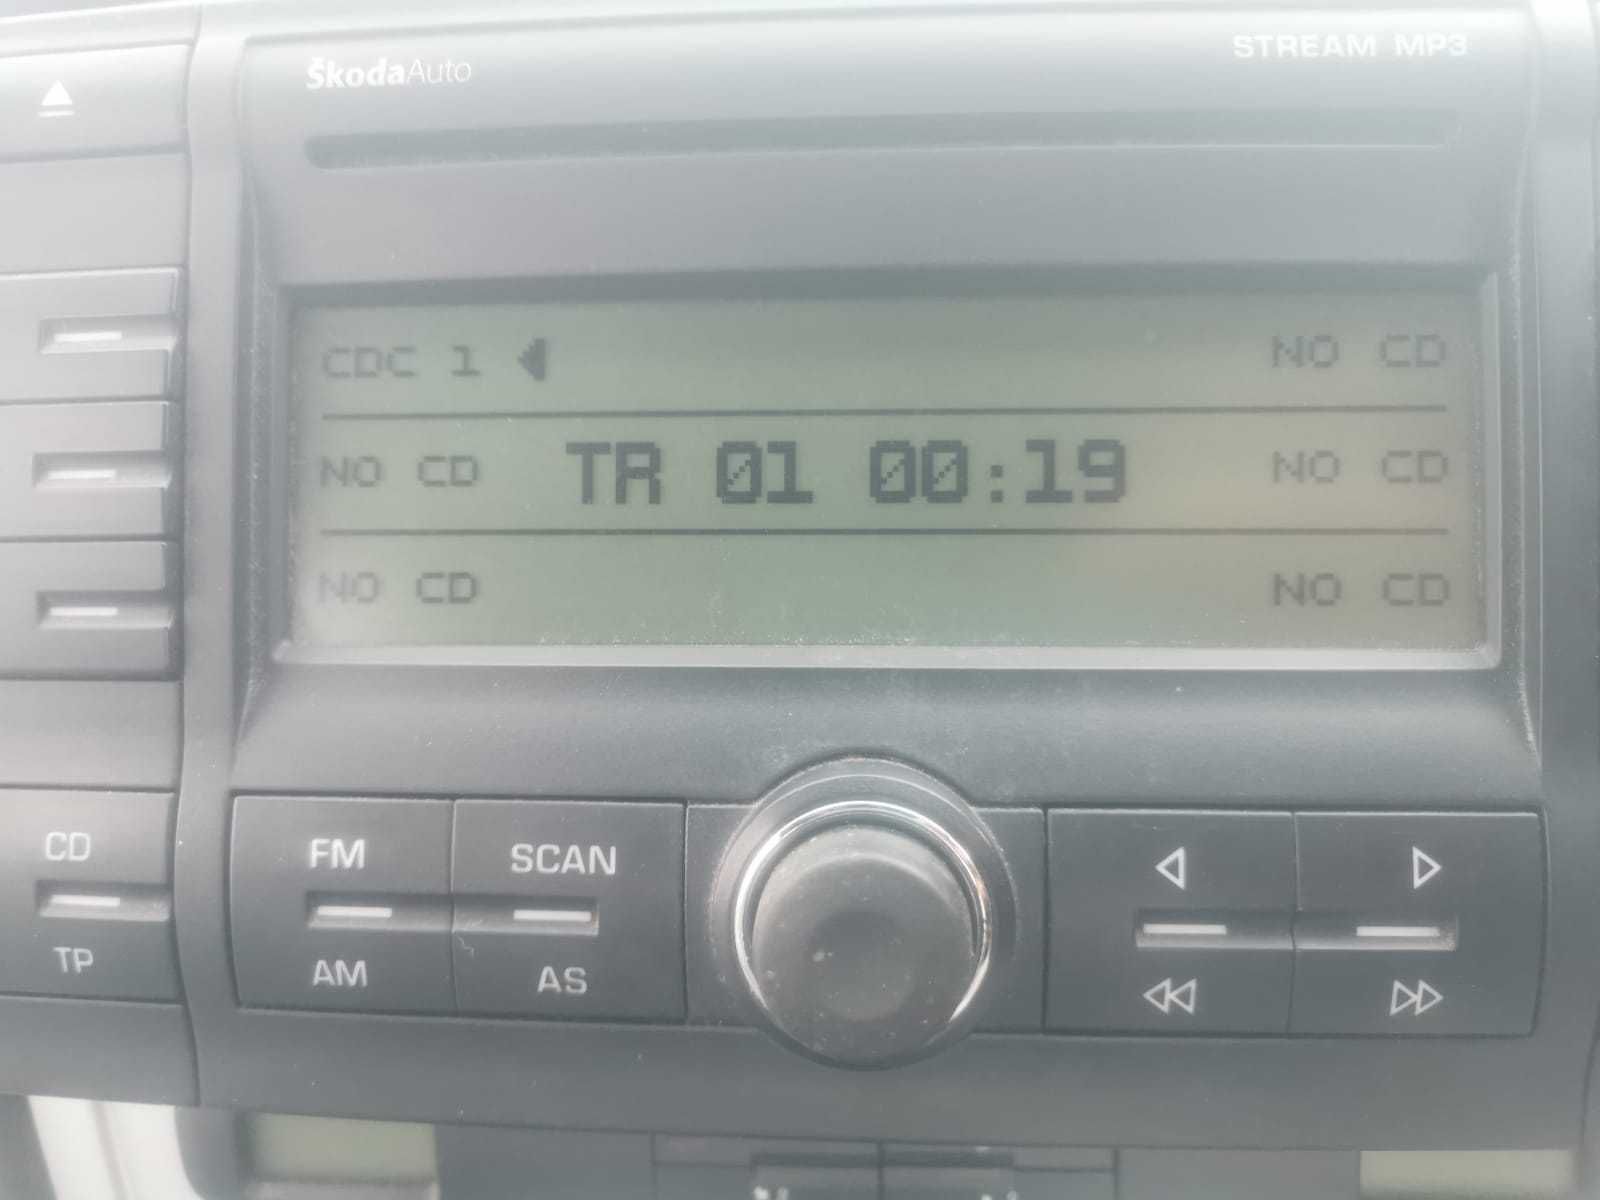 Radio Skoda Octavia 2 Stream Mp3